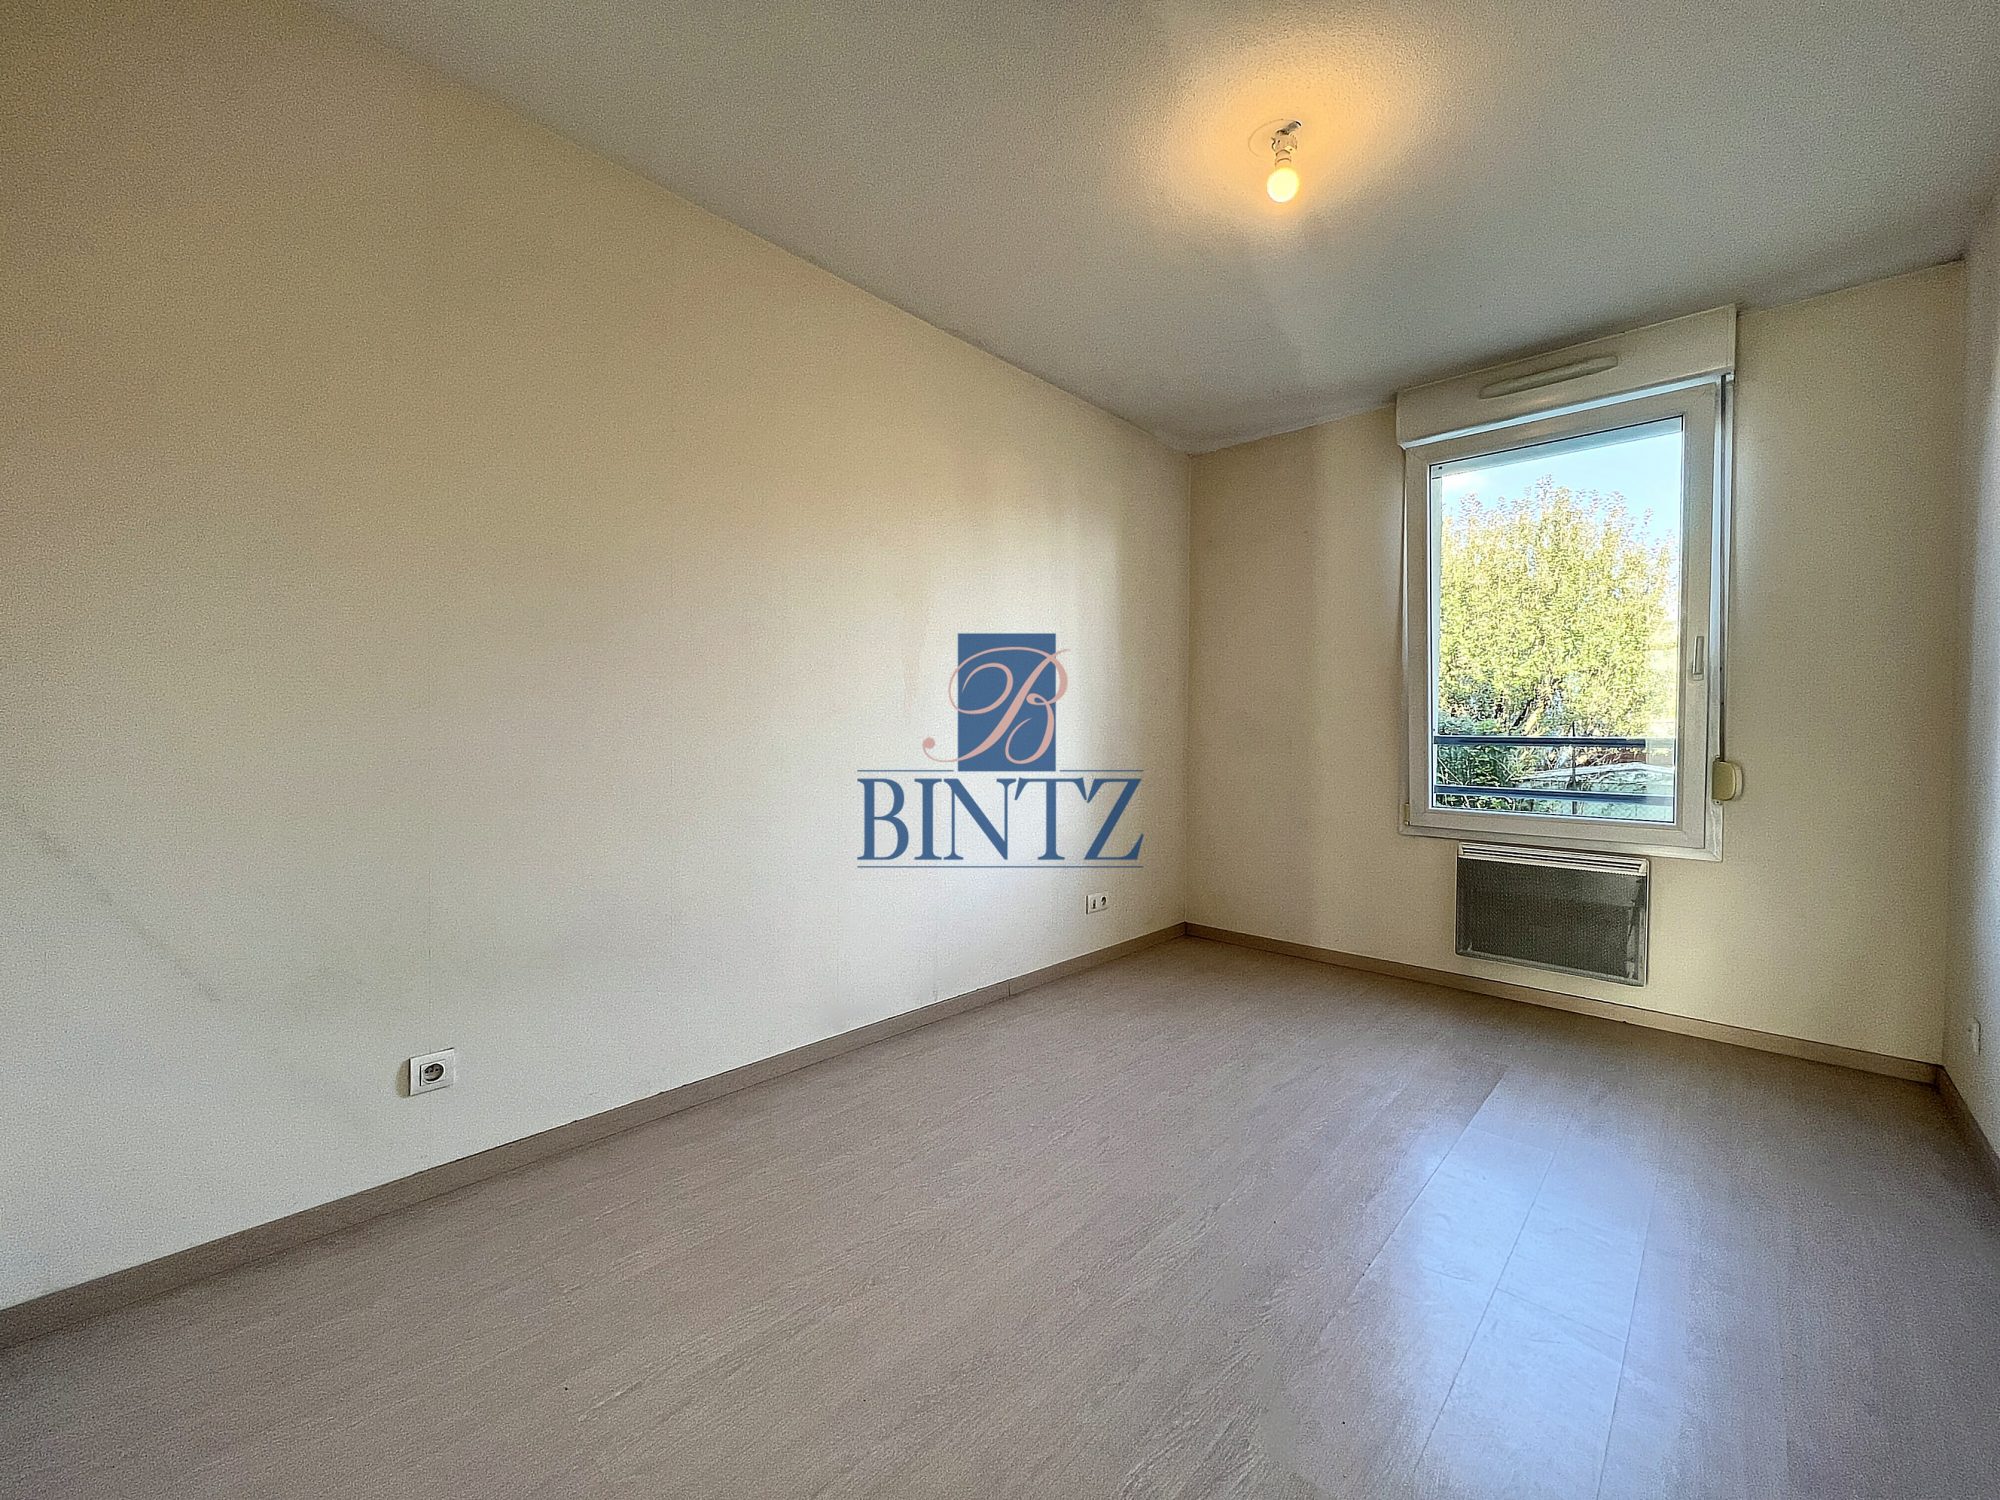 3P BISCHWILLER - location immobilière - Bintz Immobilier - 7